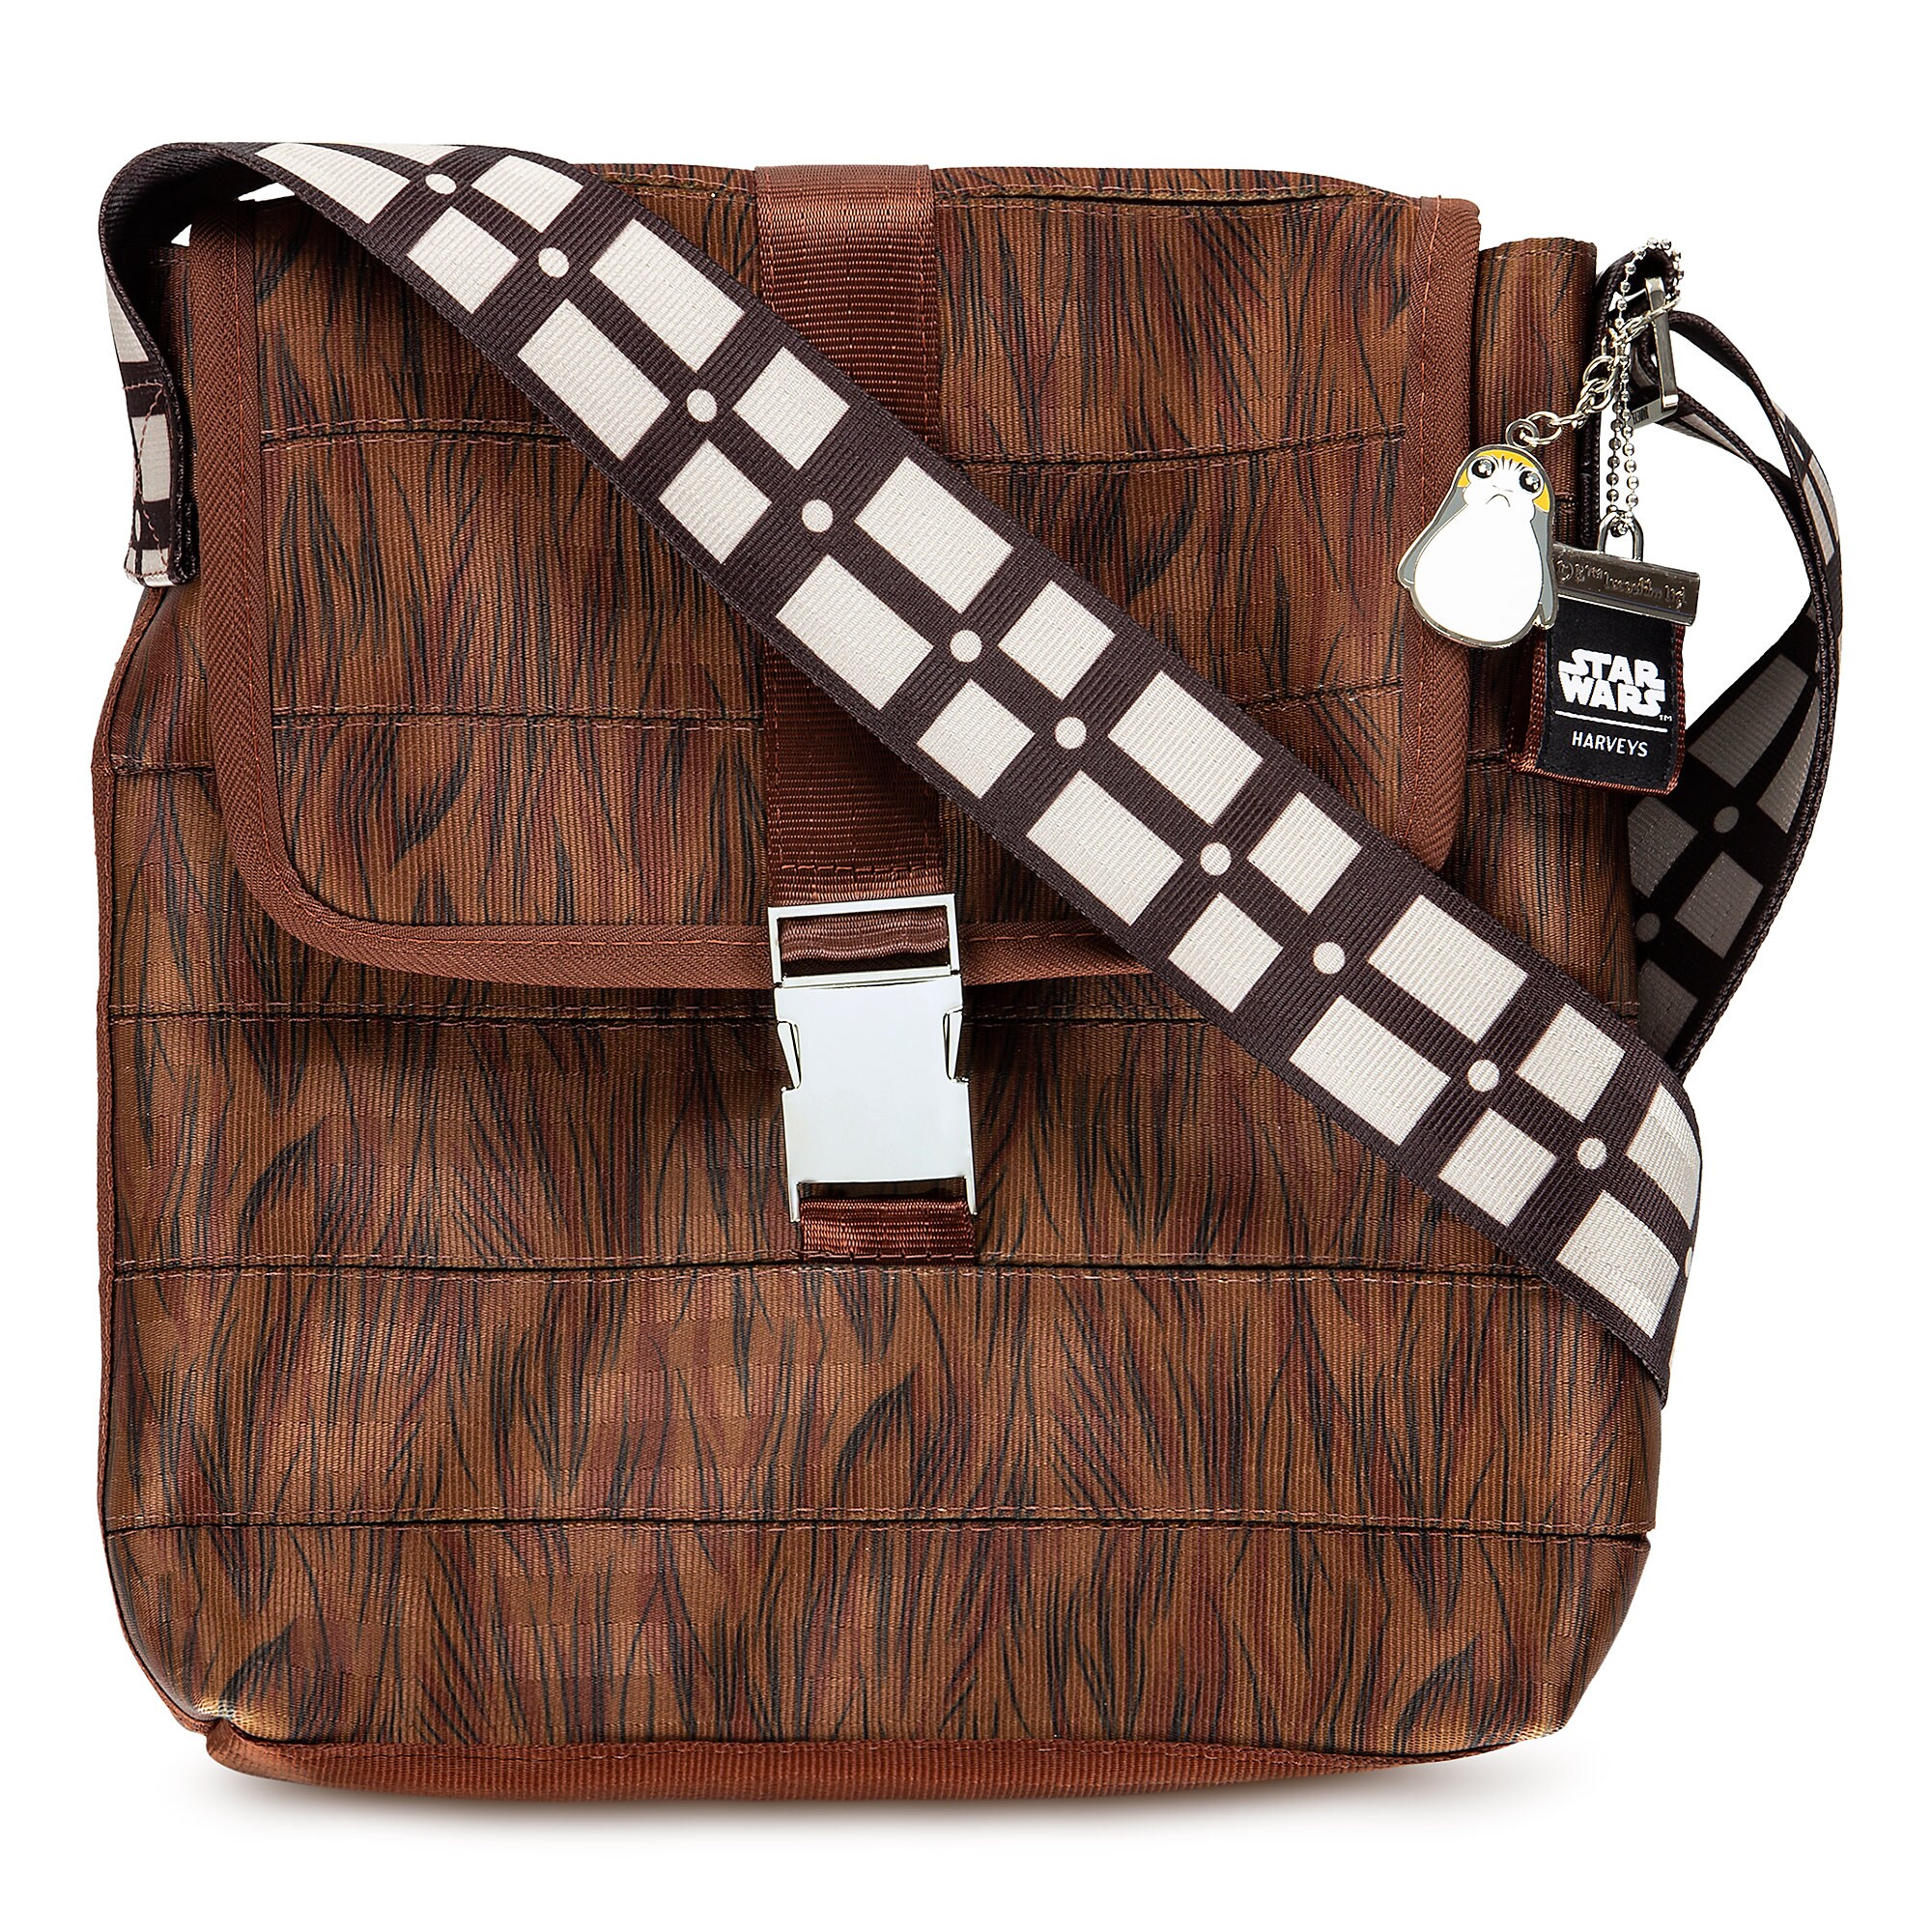 Chewbacca Messenger Bag by Harveys - Star Wars